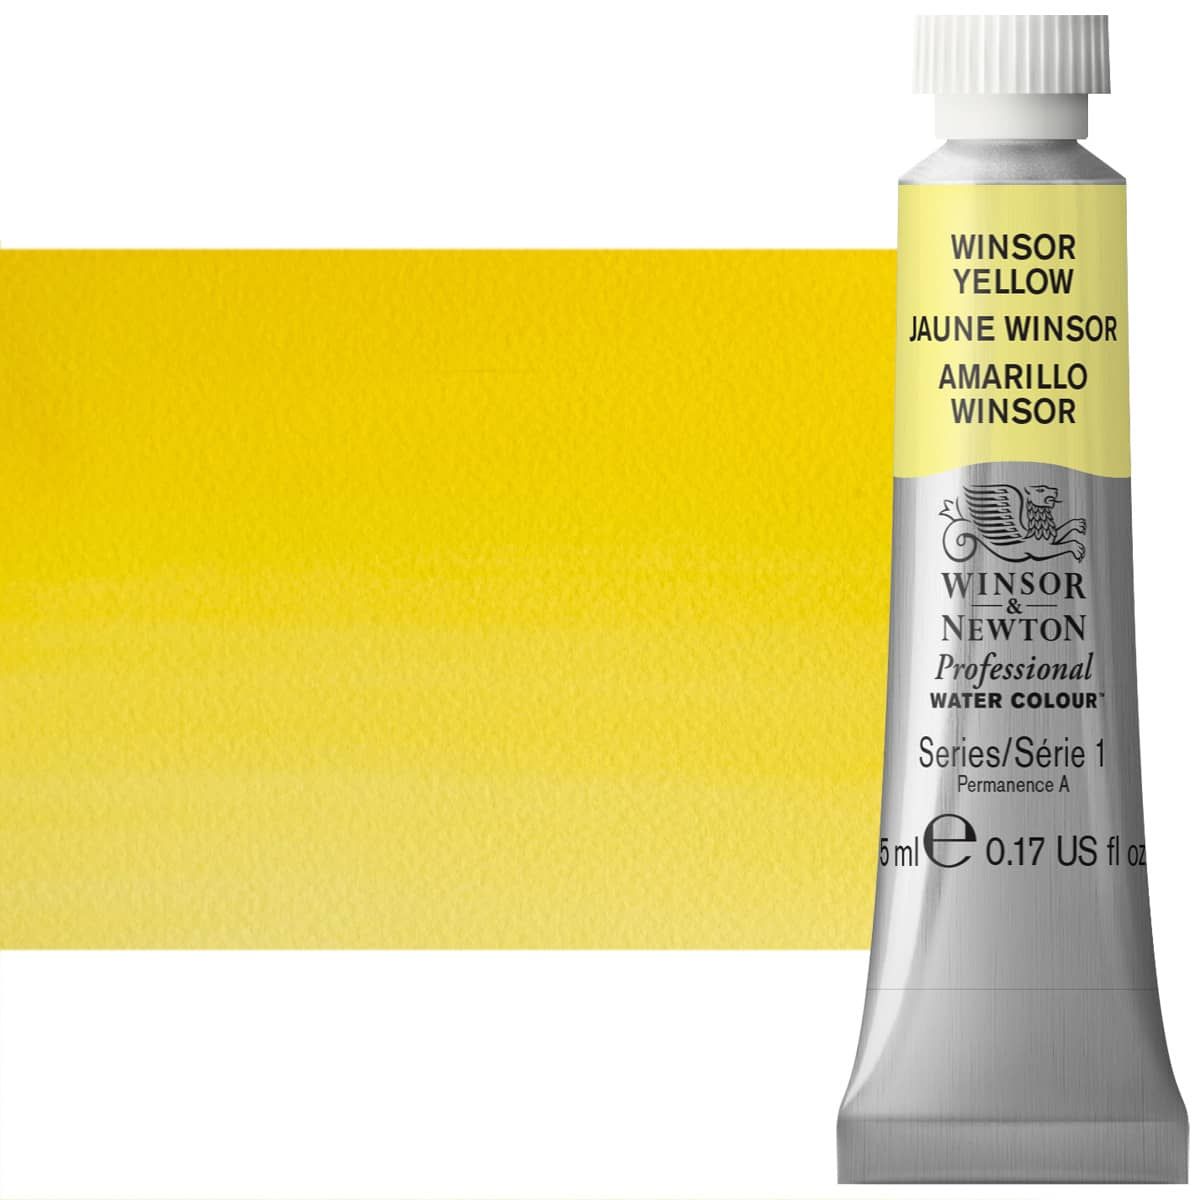 Winsor & Newton Professional Watercolor - Winsor Yellow, 5ml Tube